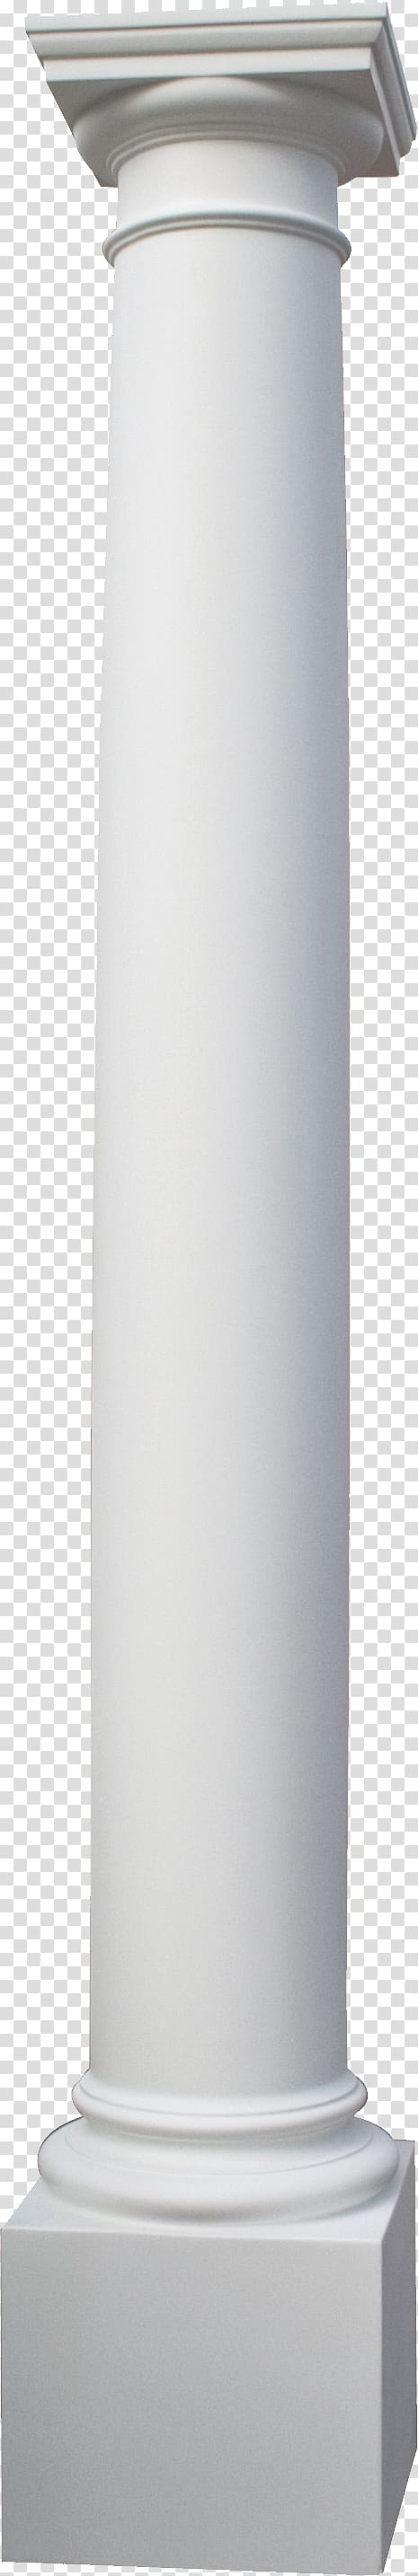 Column transparent background PNG clipart